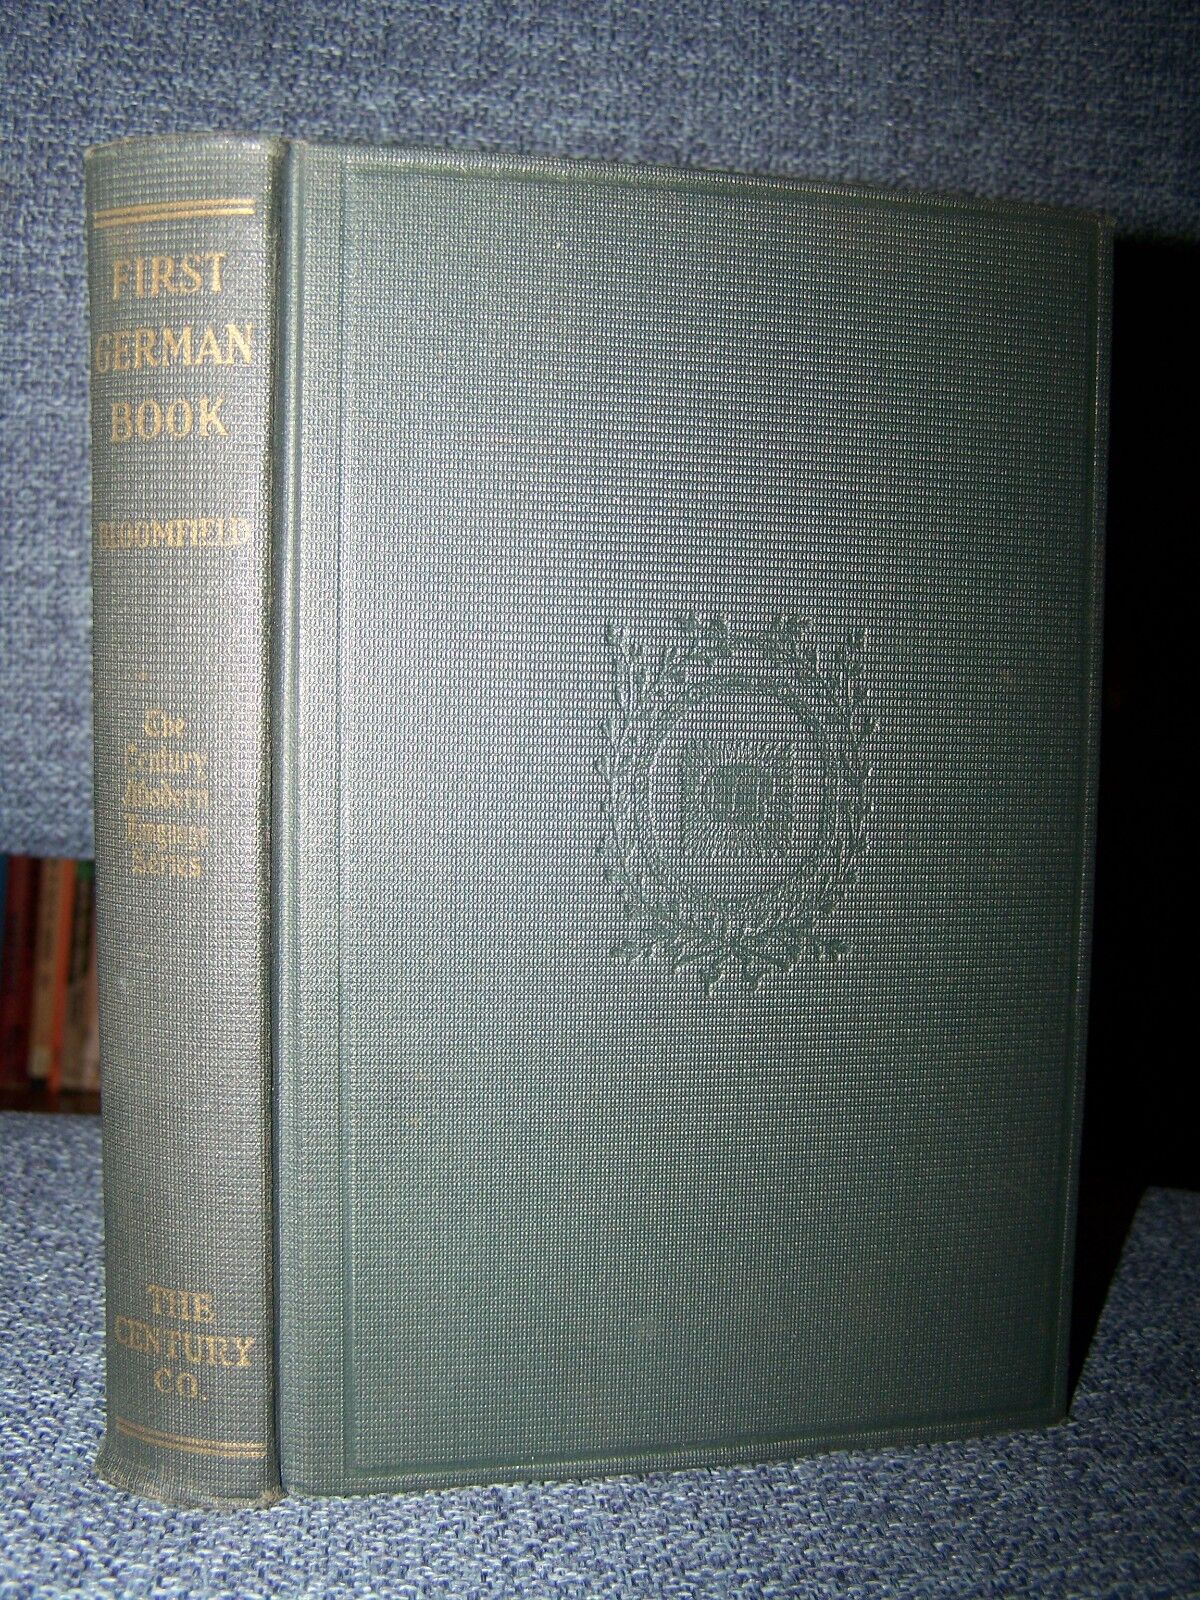 1928, First German Book, Rare, Leonard Bloomfield, The Century Co., Antique